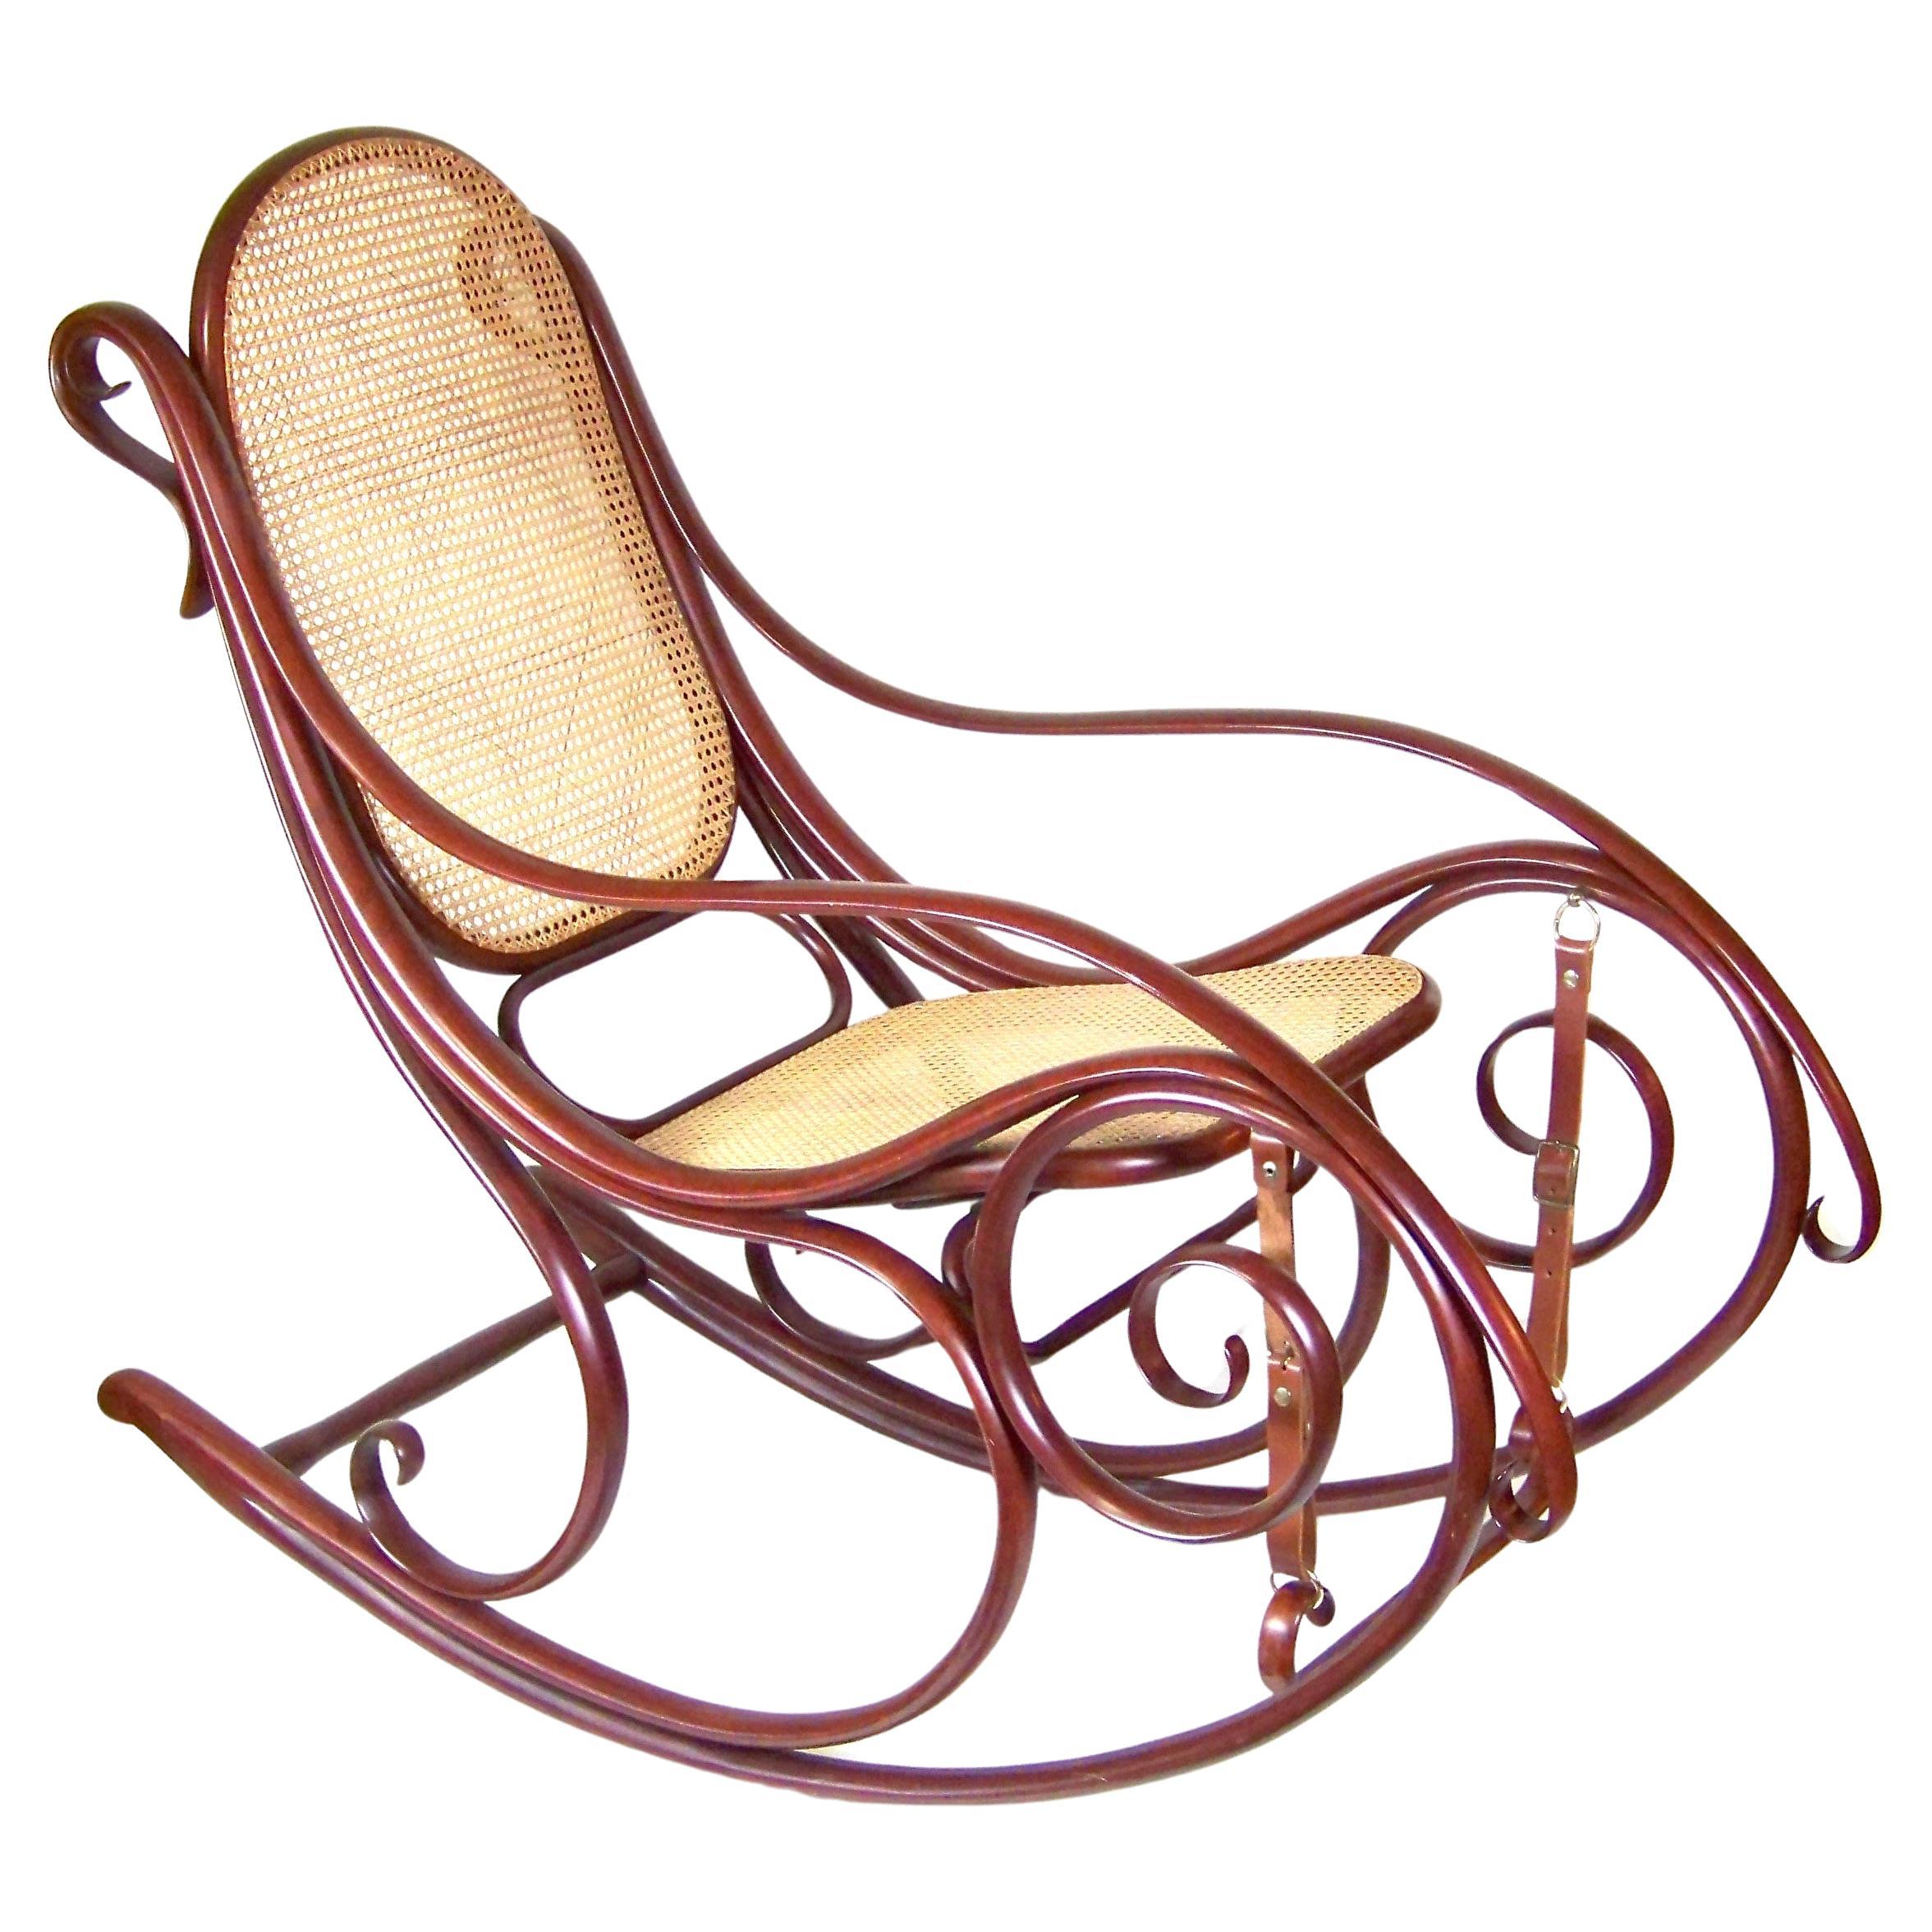 How do I identify a Thonet rocking chair?